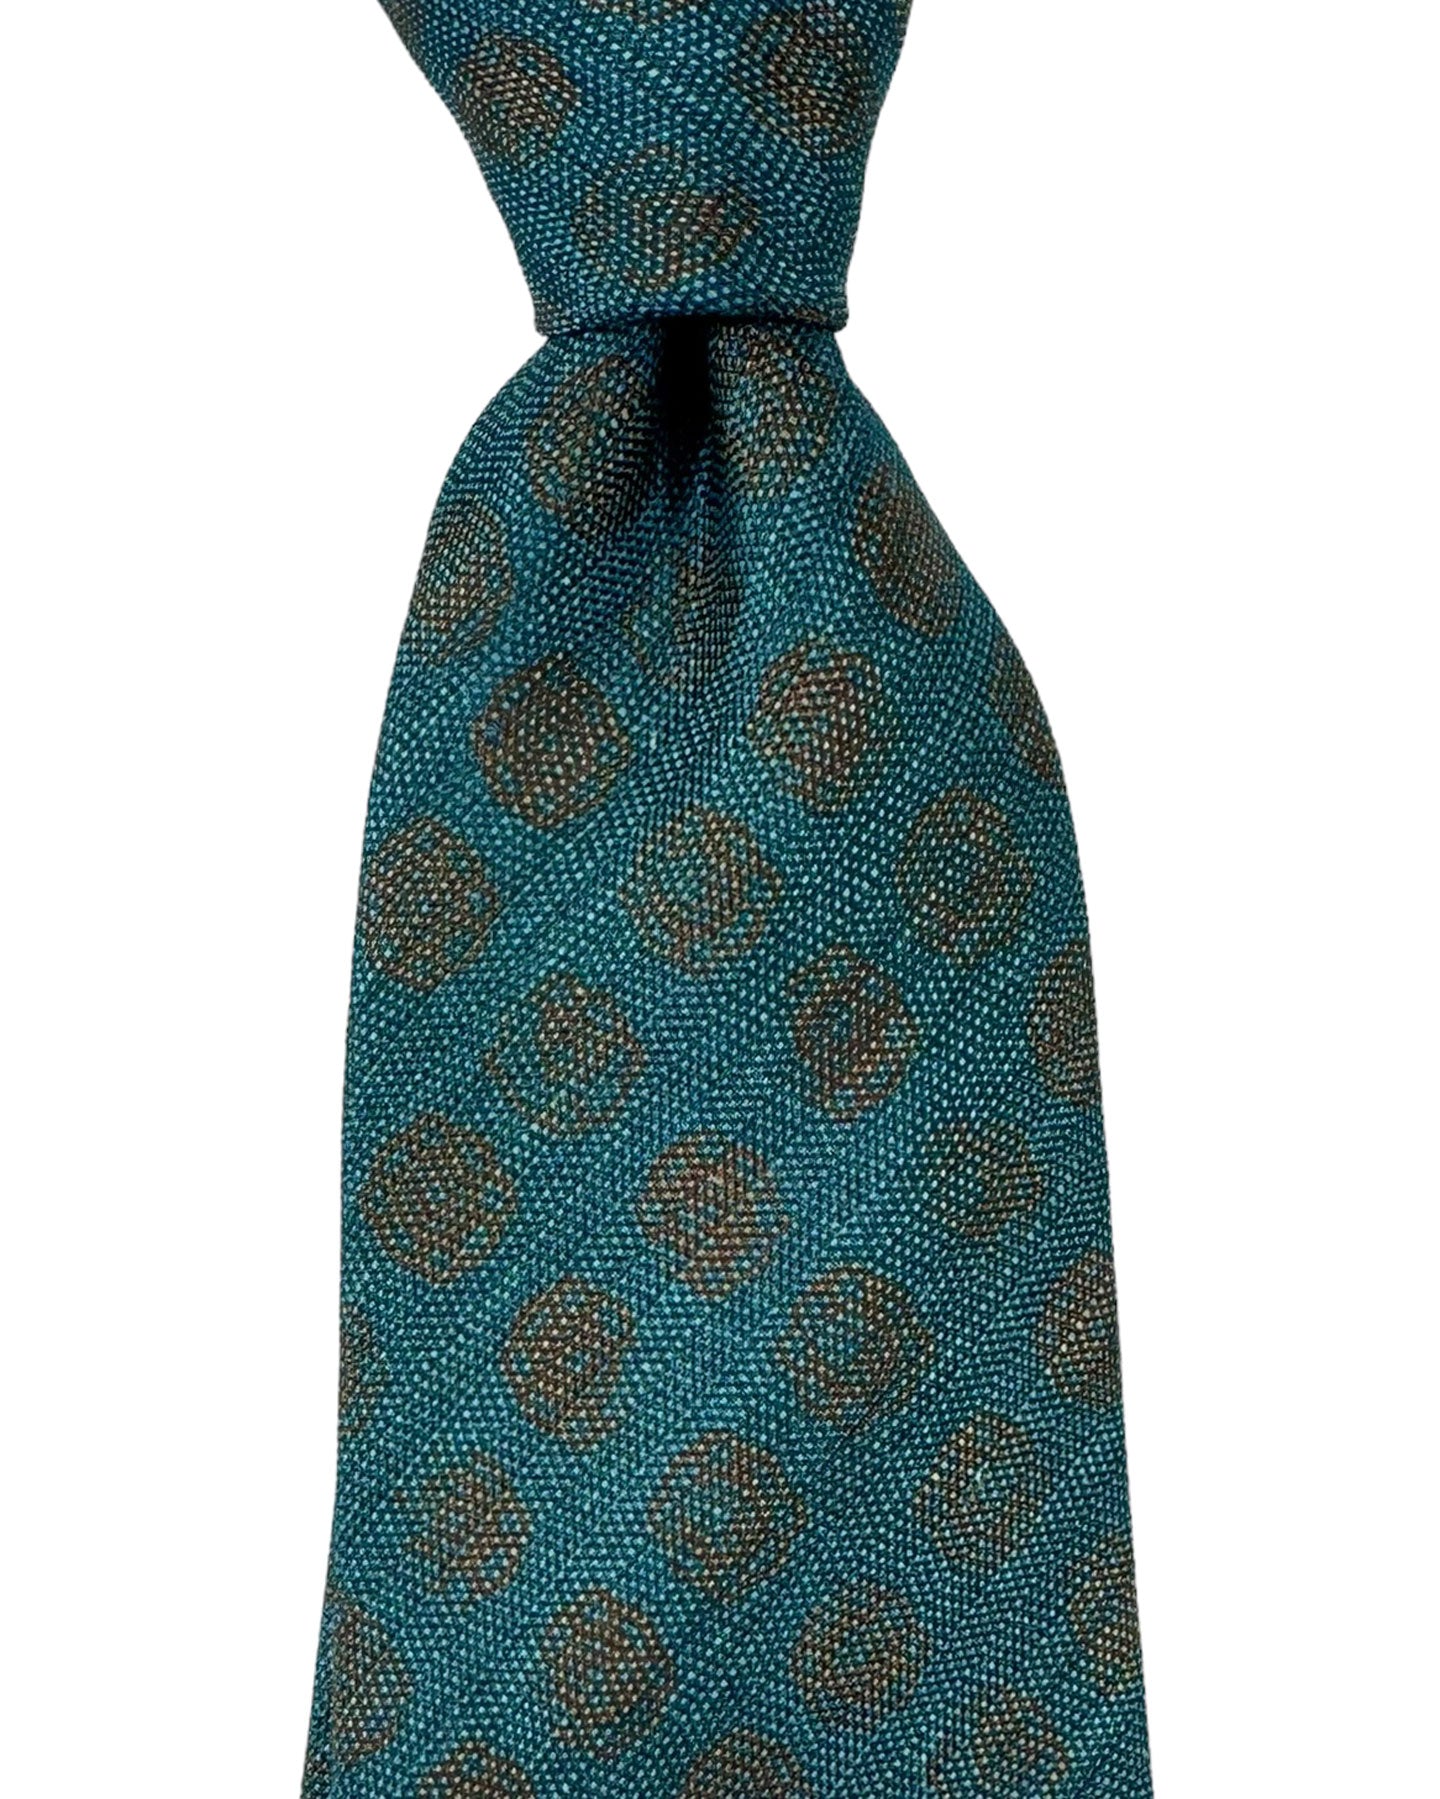 Barba Sevenfold Tie Ocean Blue Brown Polka Dots Design - Sartorial Neckwear